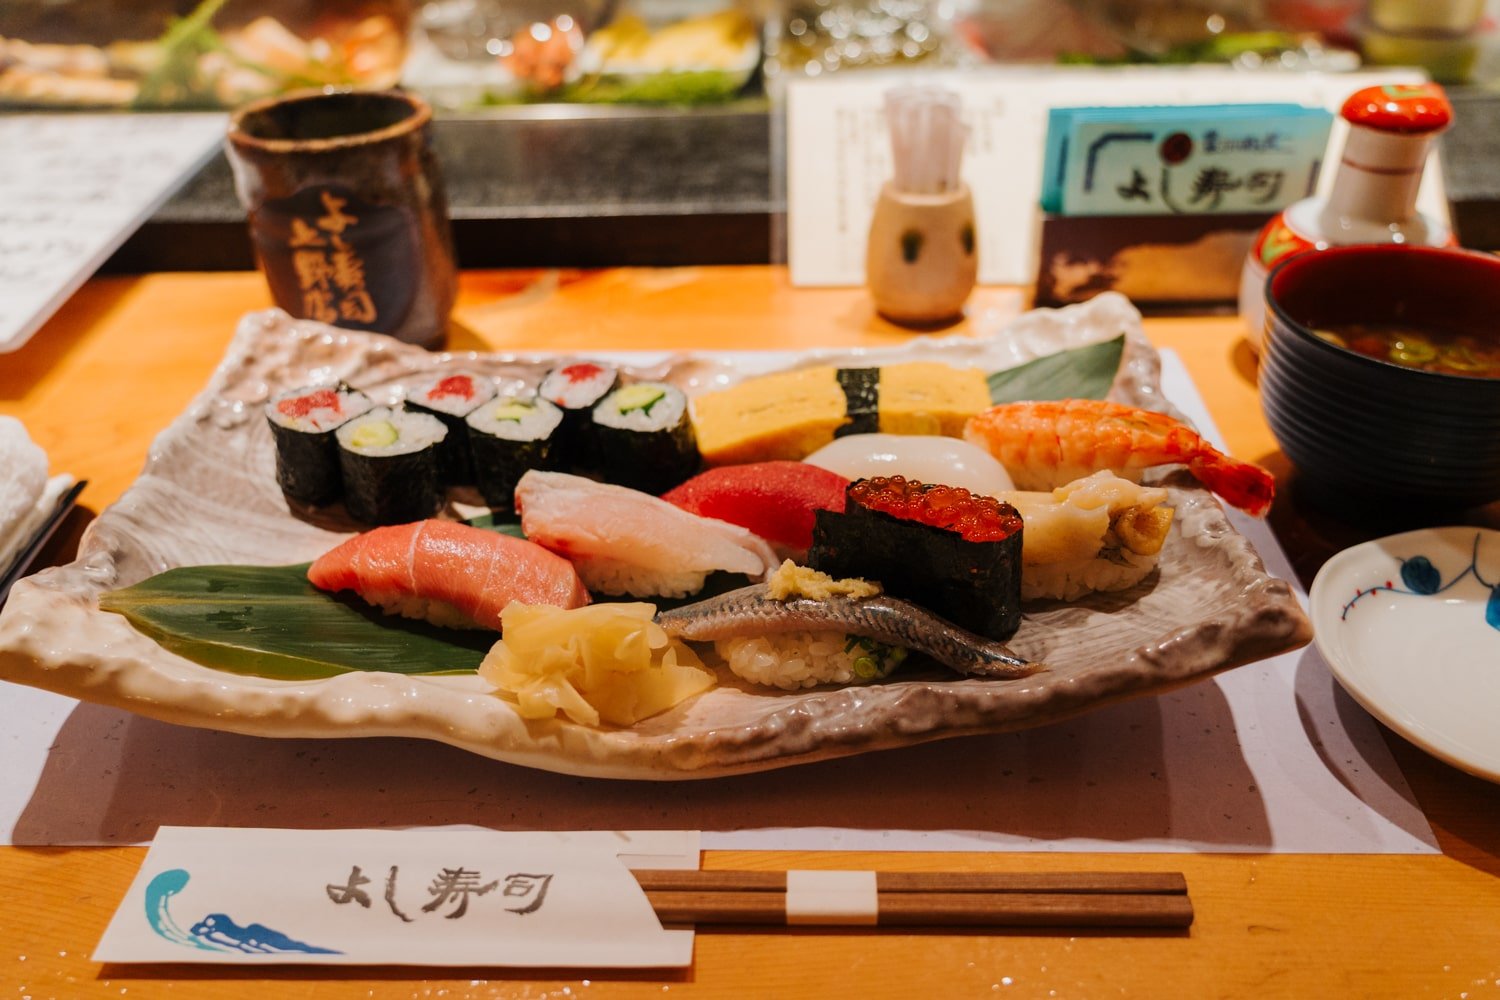 Plate of high-quality Japanese sushi with various nigiri sushi and maki sushi.